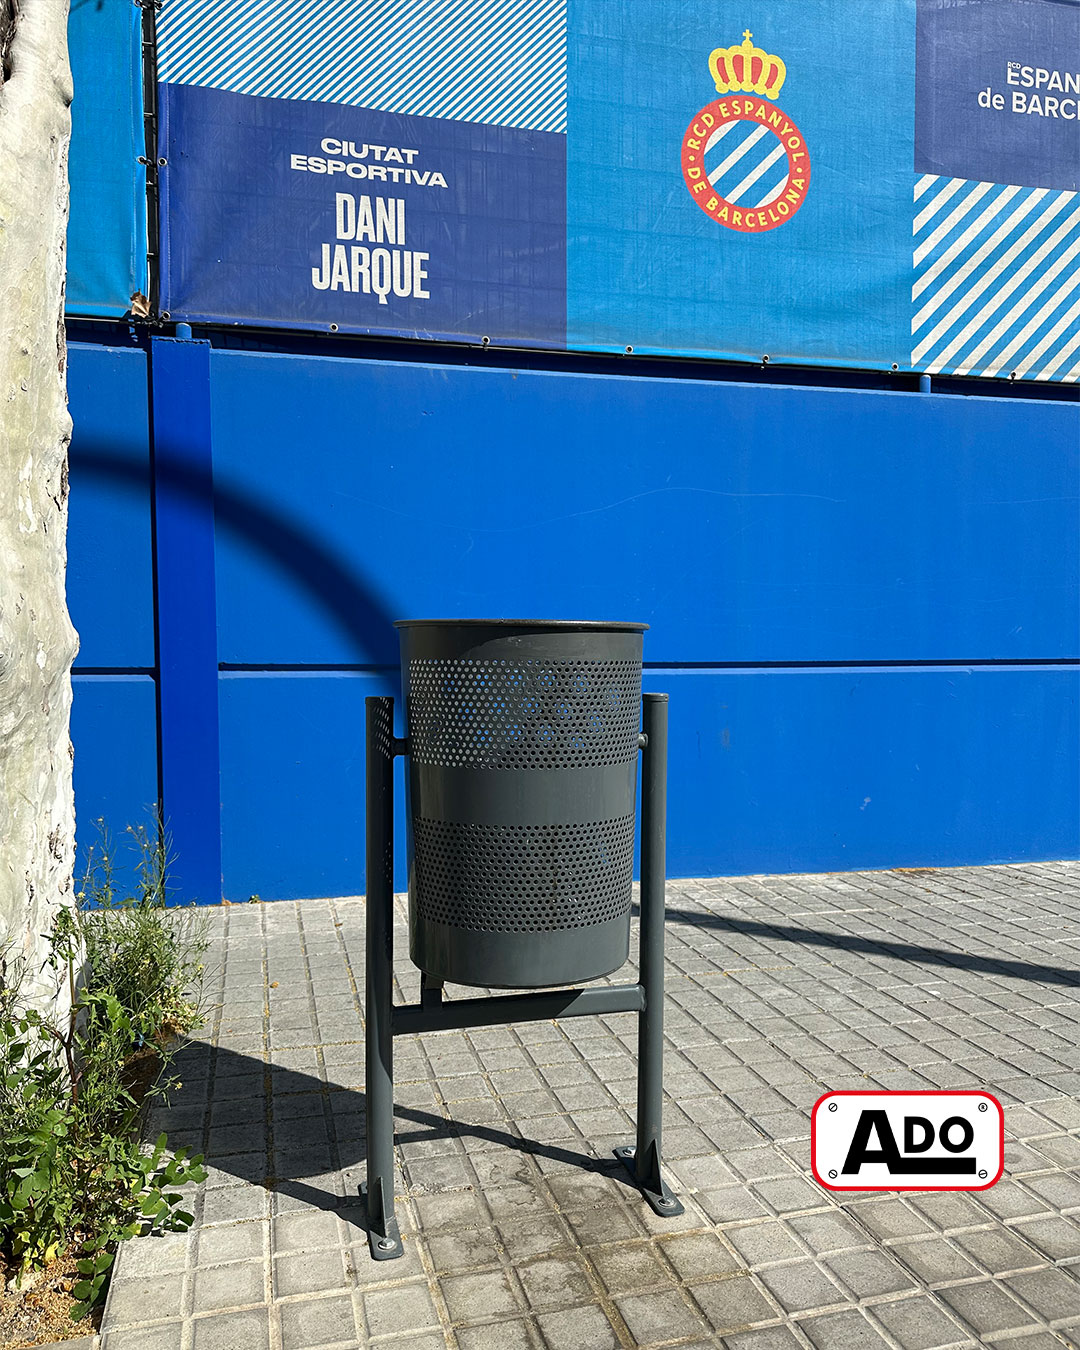 Circular iron urban litter bin installed